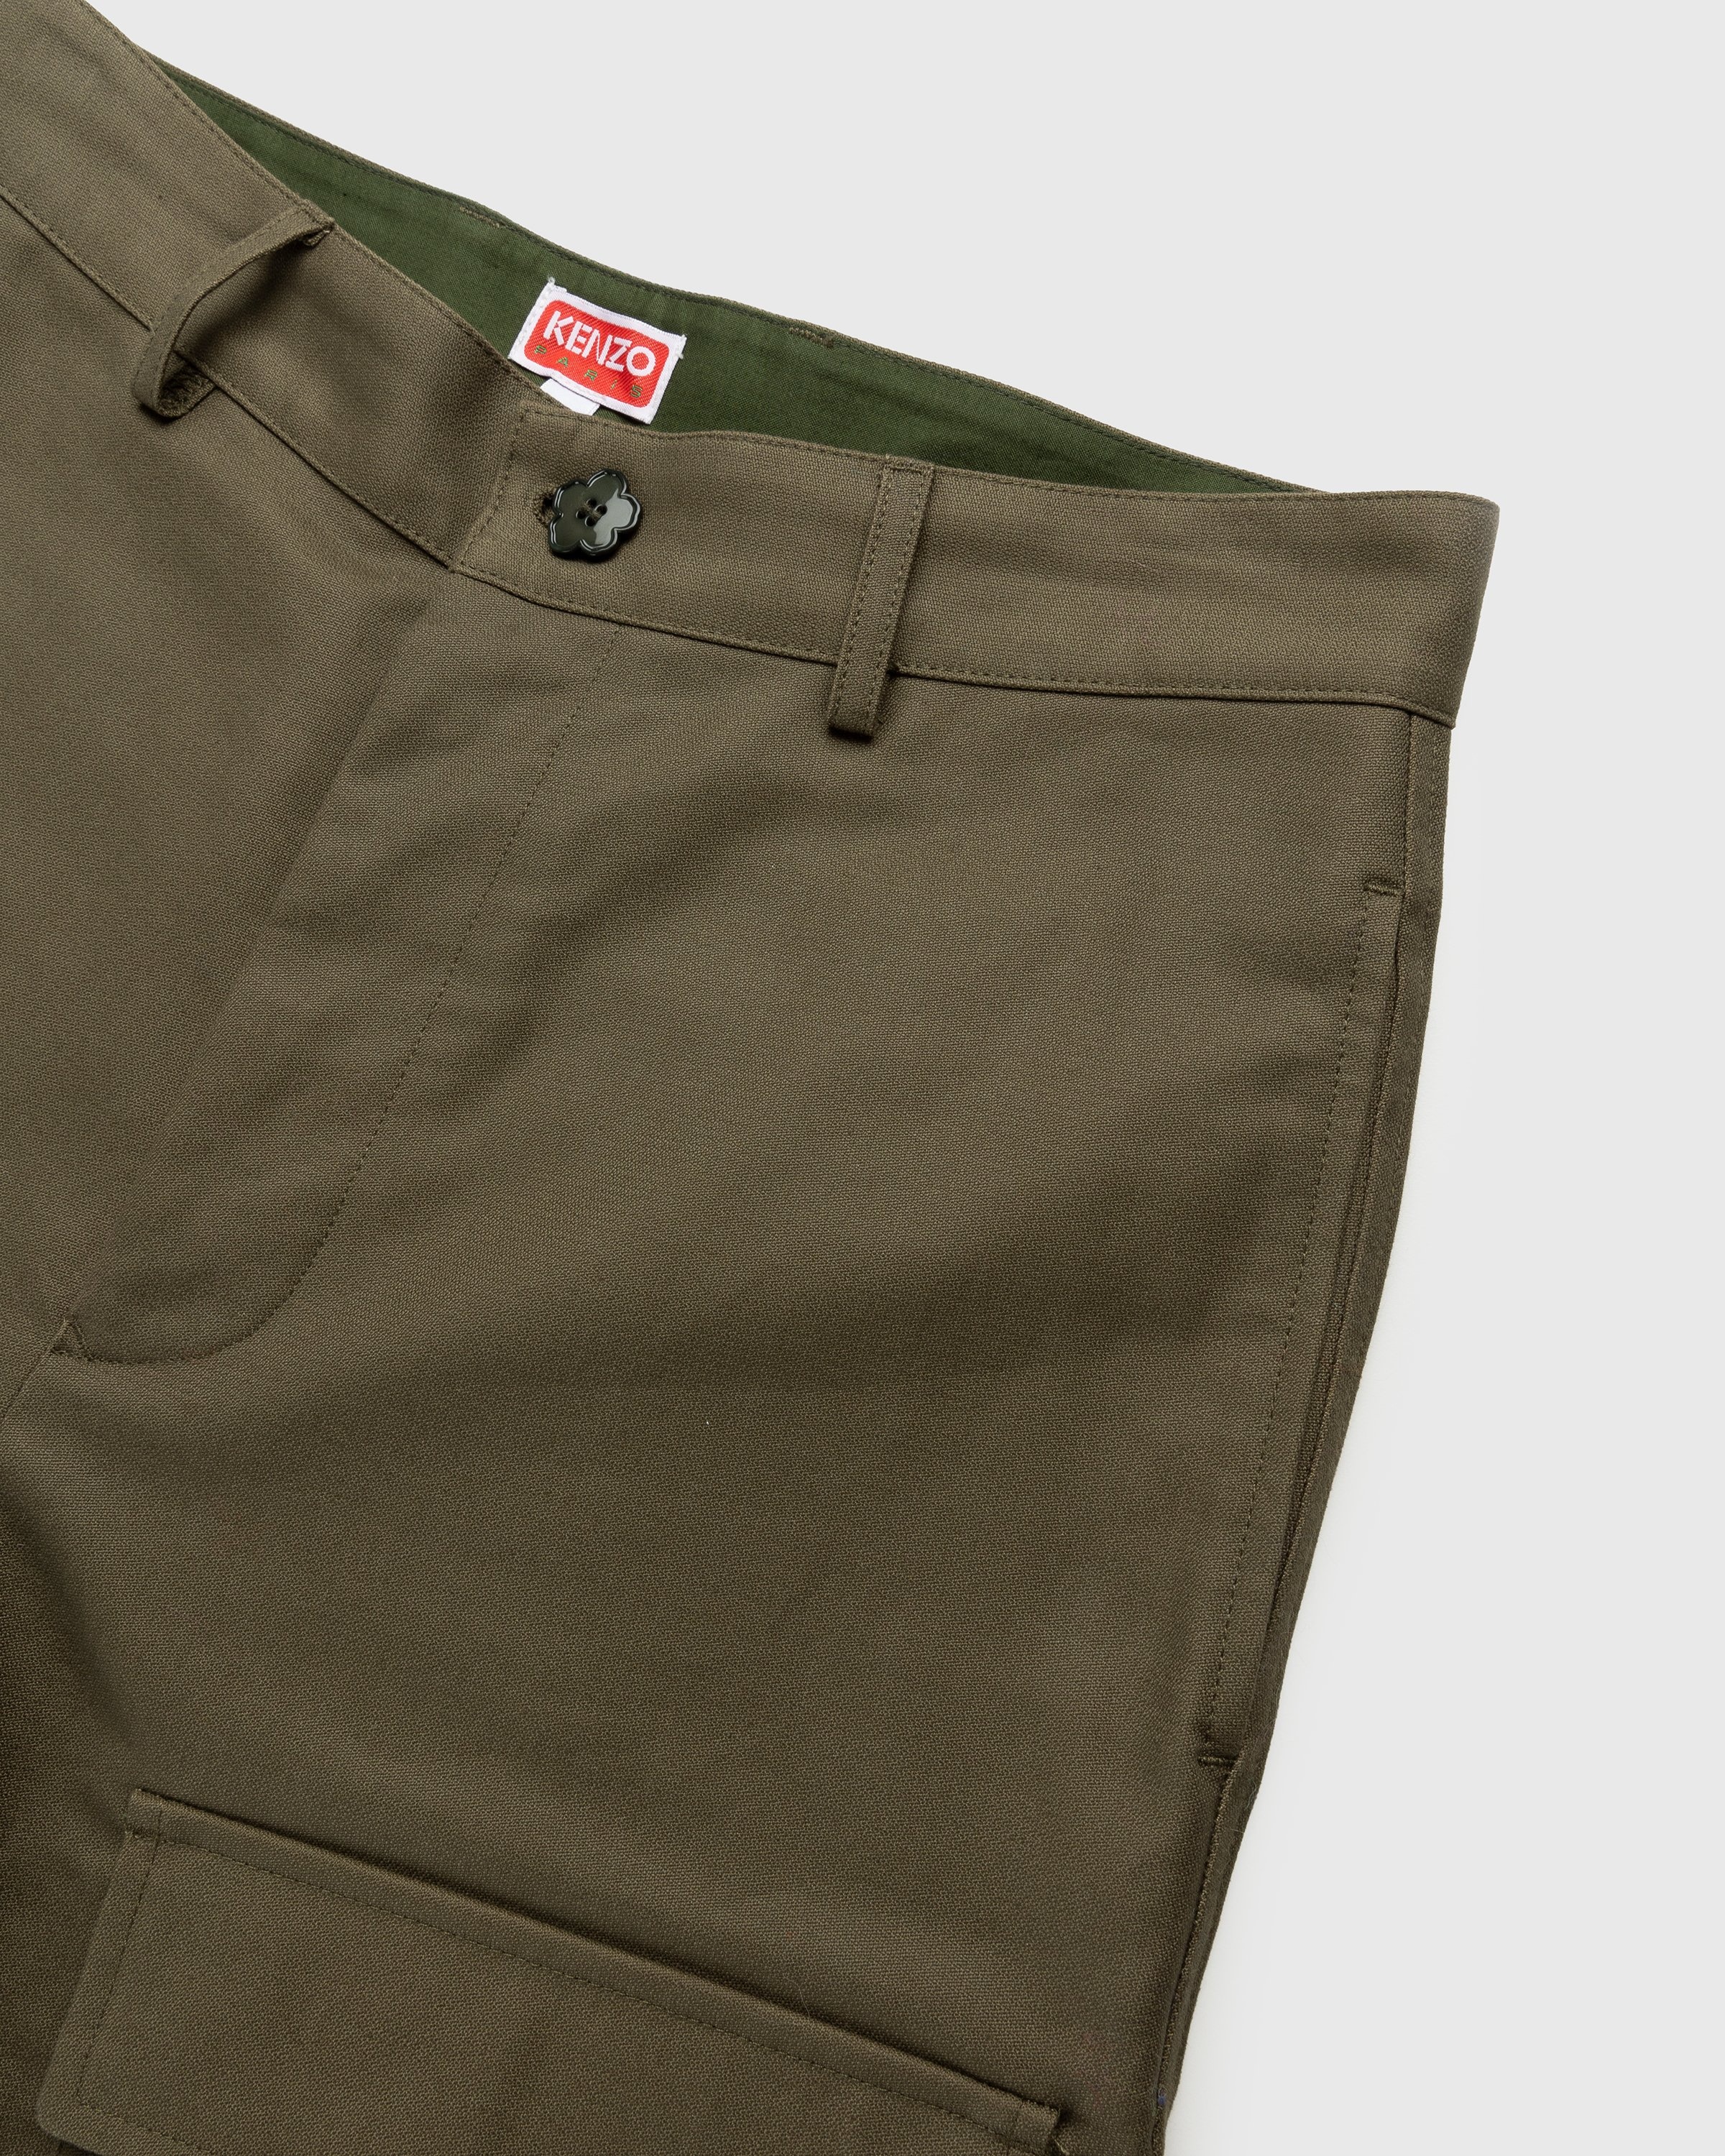 Kenzo – Tailored Pants Dark Khaki - Pants - Green - Image 4